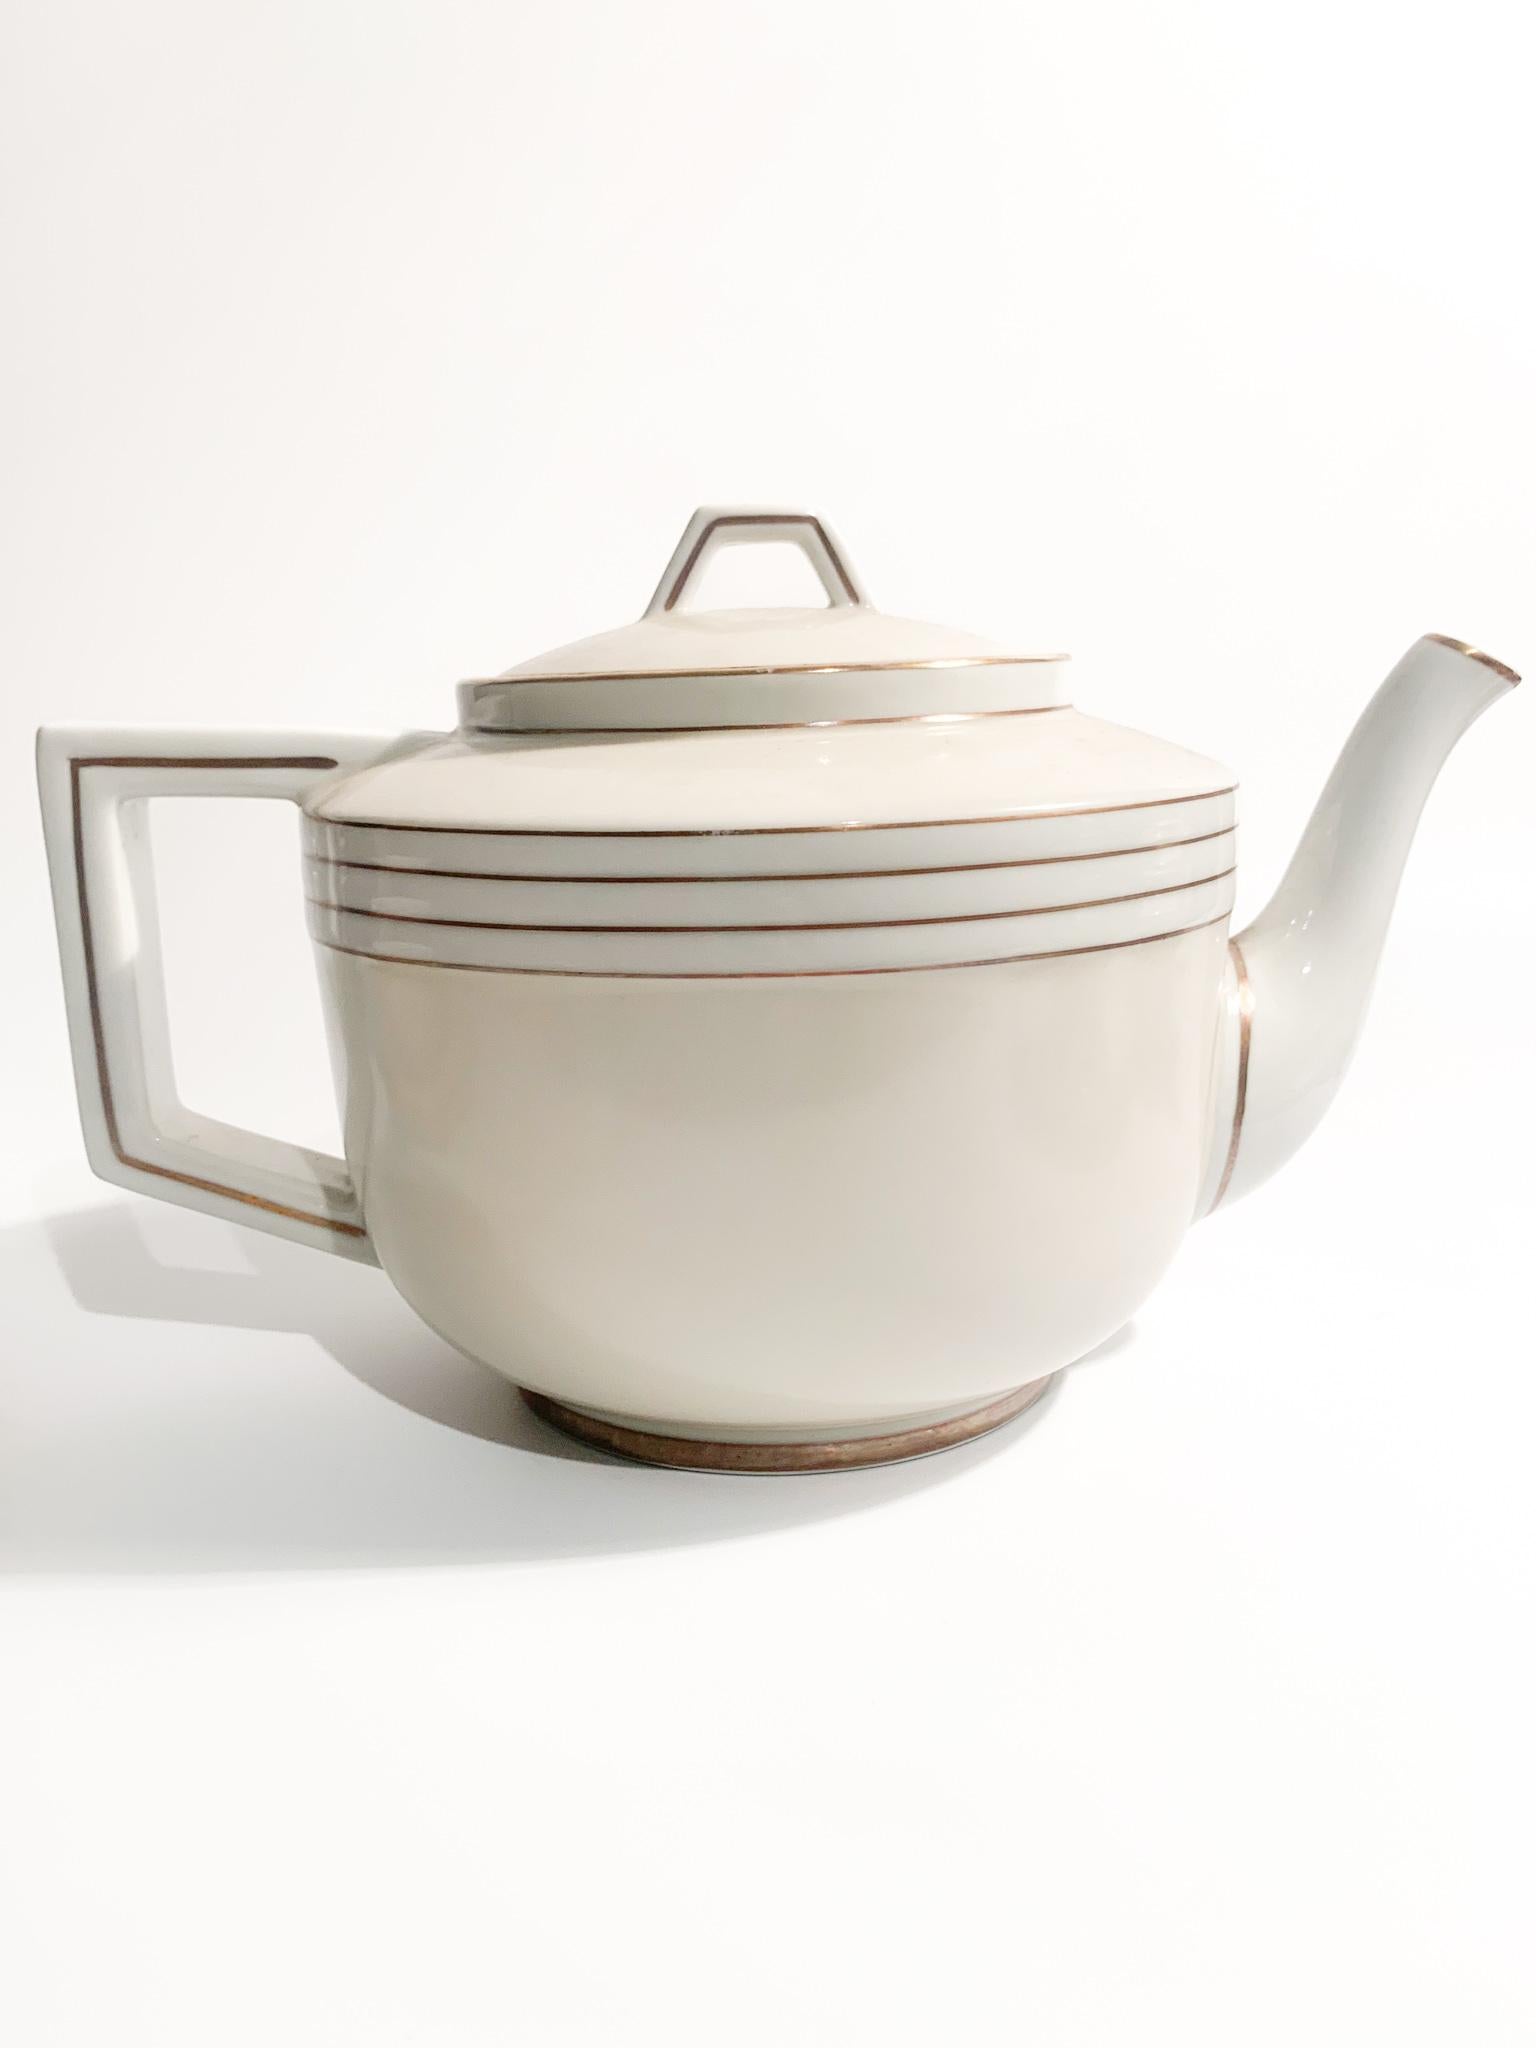 Twelve Richard Ginori Decò Tea Set in Porcelain from the 1940s 3